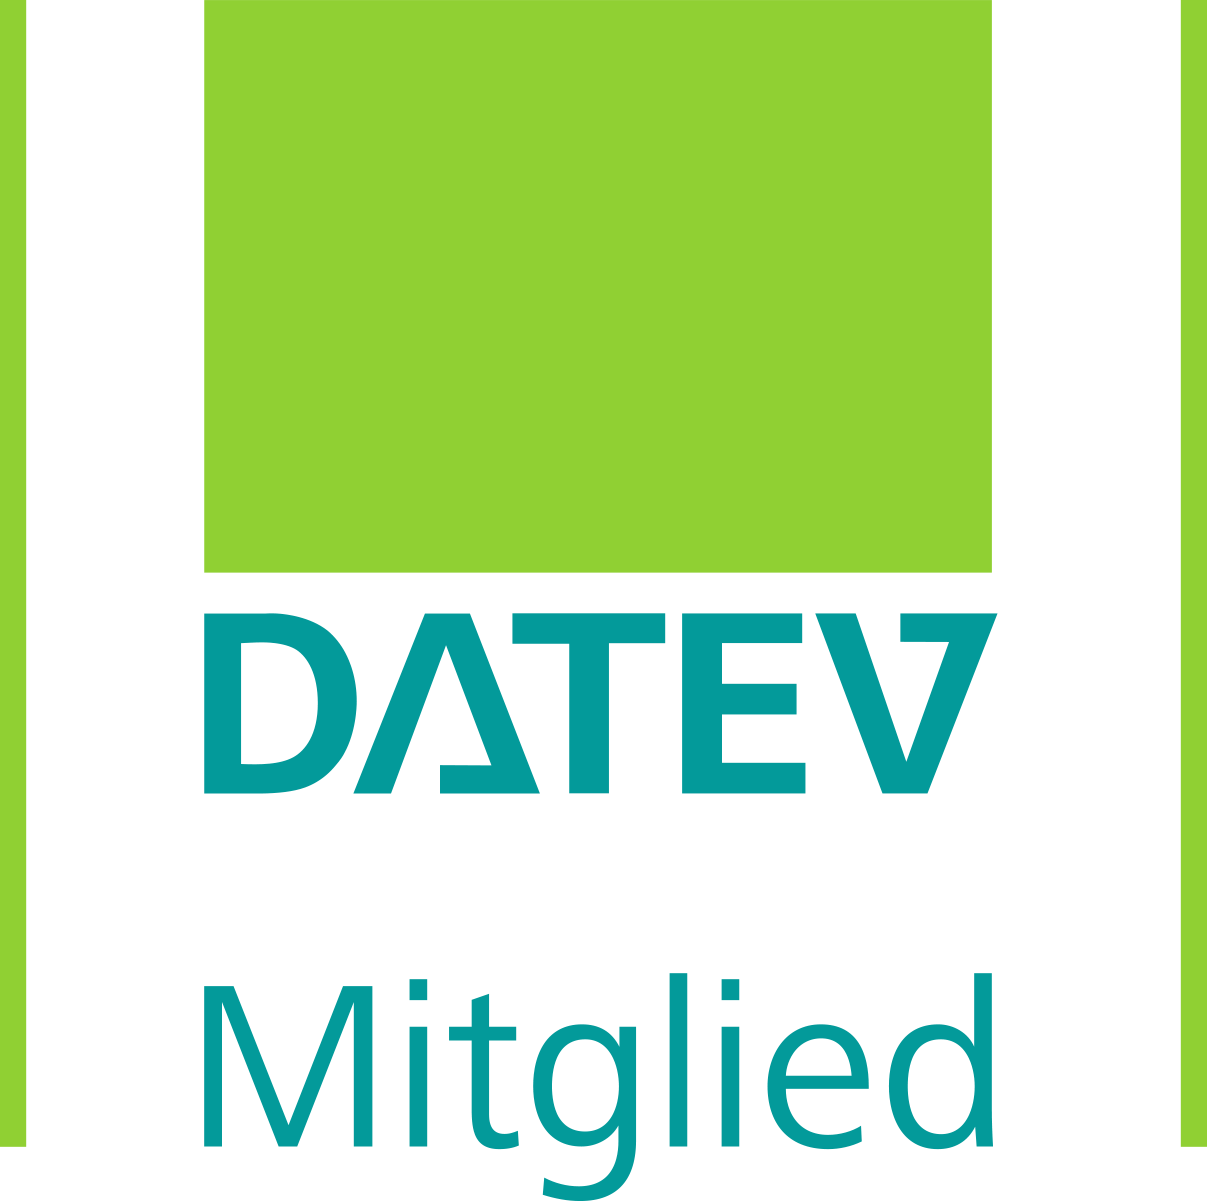 DATEV Mitglied Logo